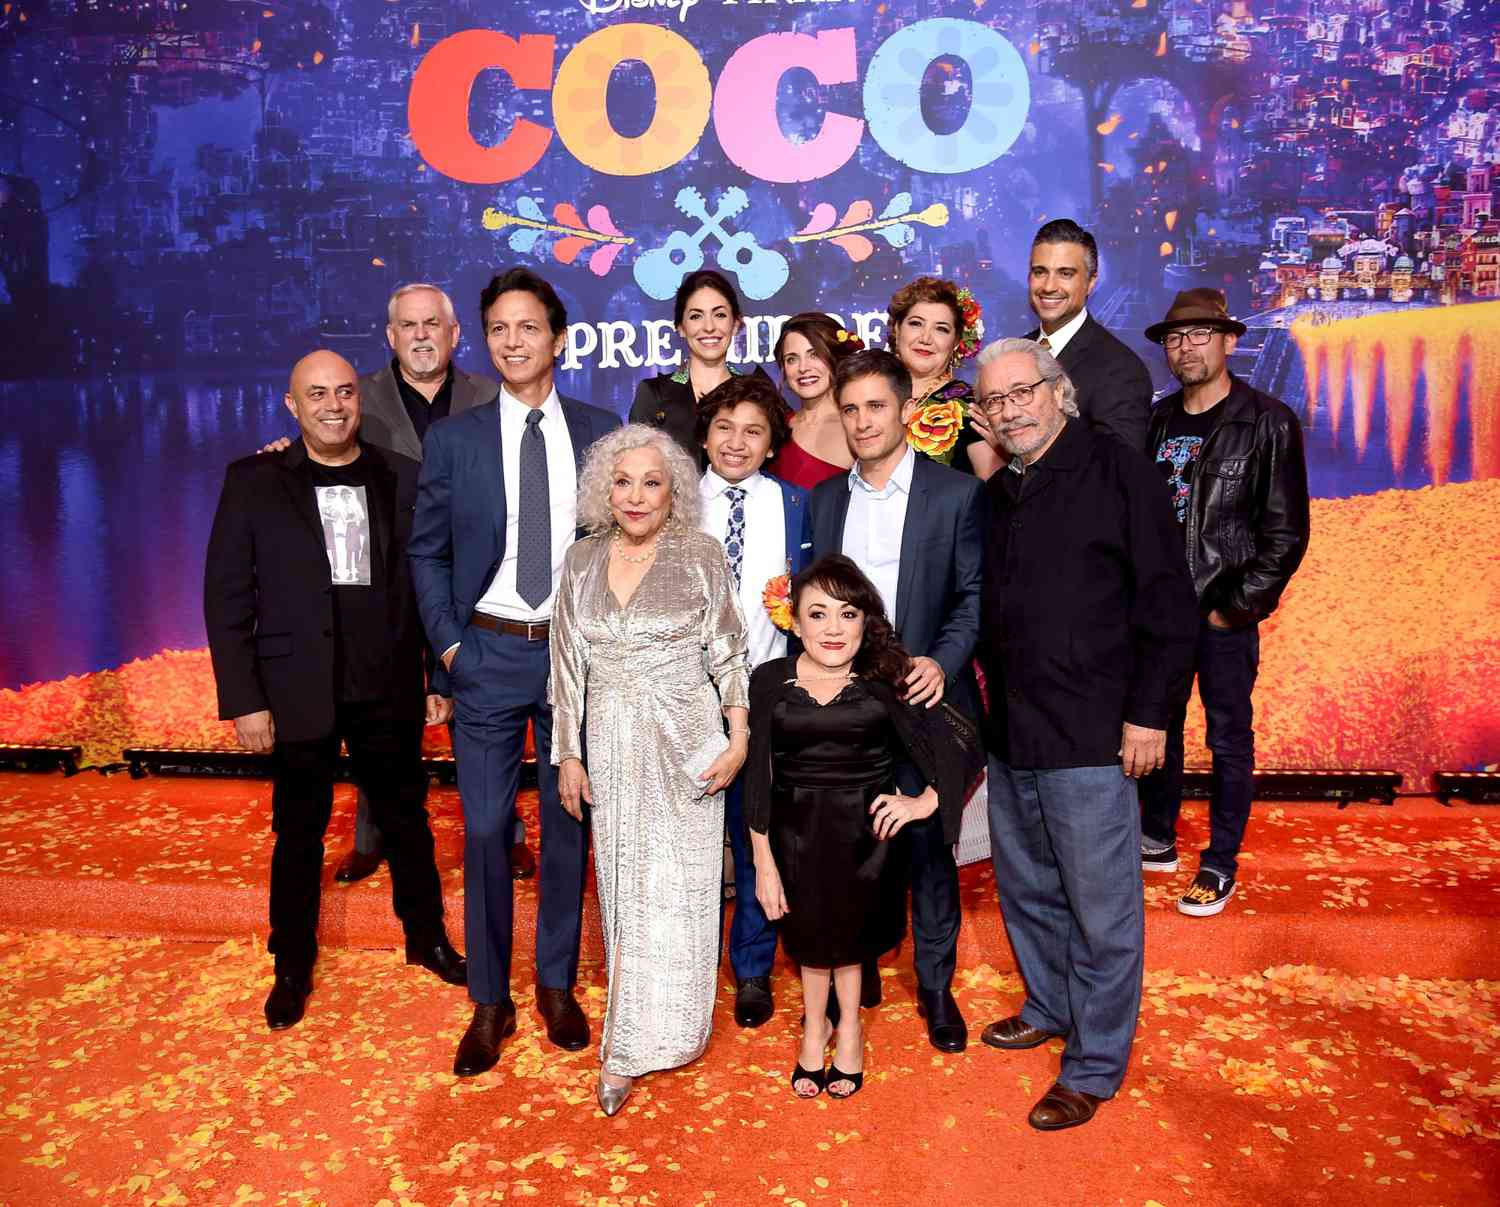 Premiere Of Disney Pixar's "Coco" - Red Carpet